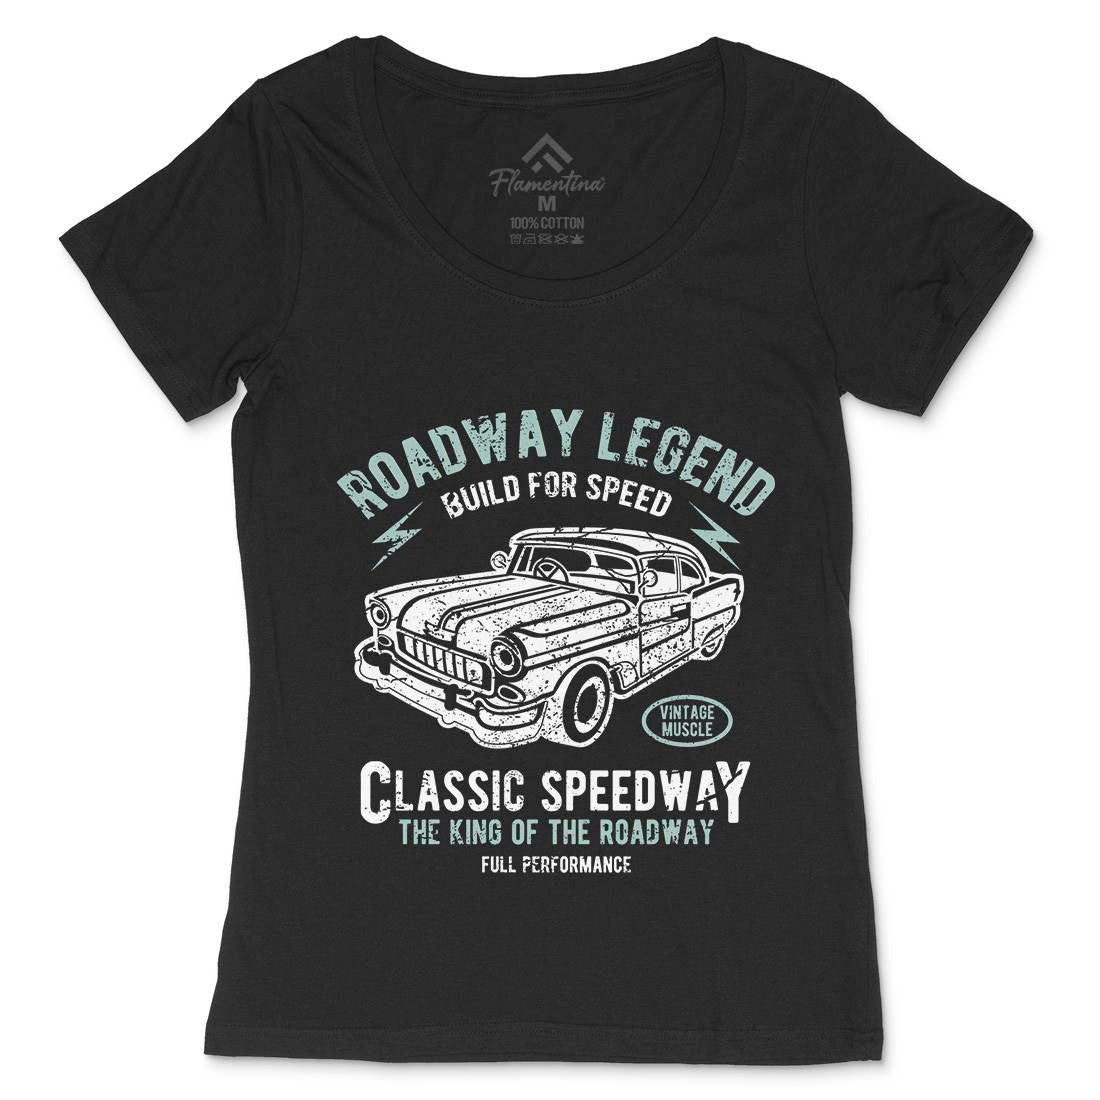 Roadway Legend Womens Scoop Neck T-Shirt Cars A124